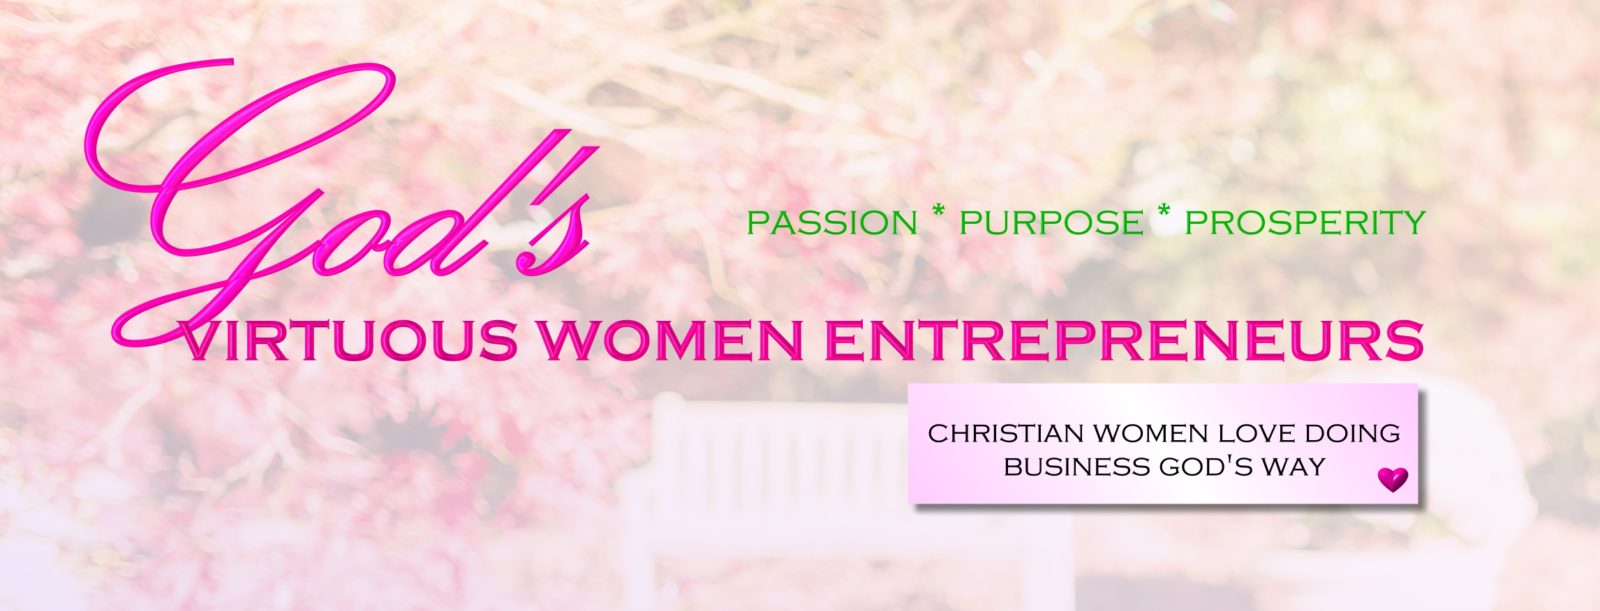 God's Virtuous Women Entrepreneurs